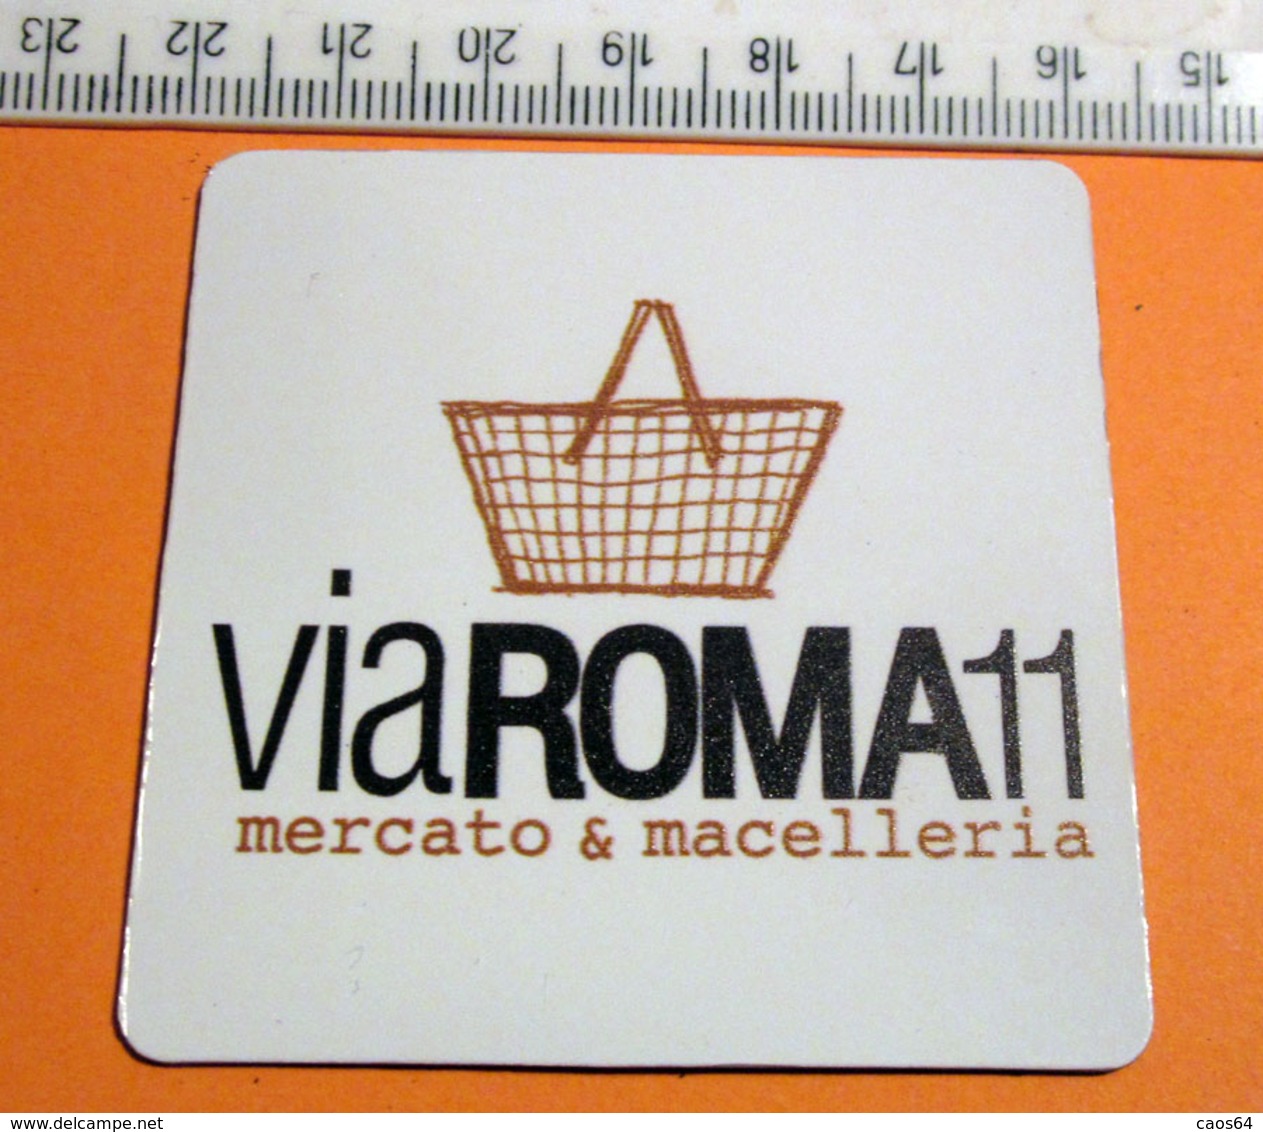 CALAMITA DA FRIGO MAGNETE VIA ROMA 11 MERCATO E MACELLERIA - Humoristiques